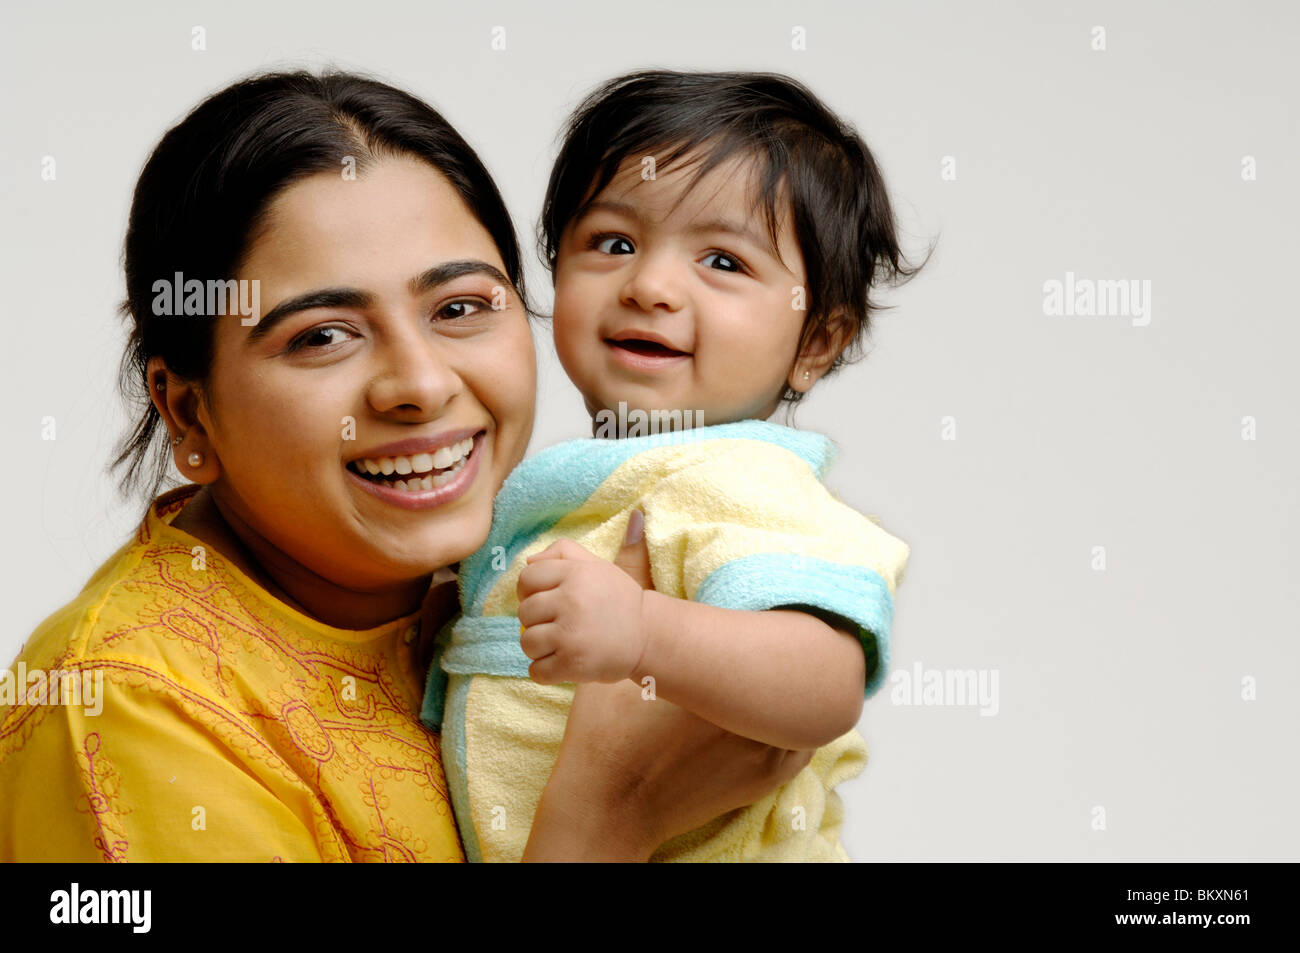 Indian Mother & Baby in Joyful mood ; MR Stock Photo